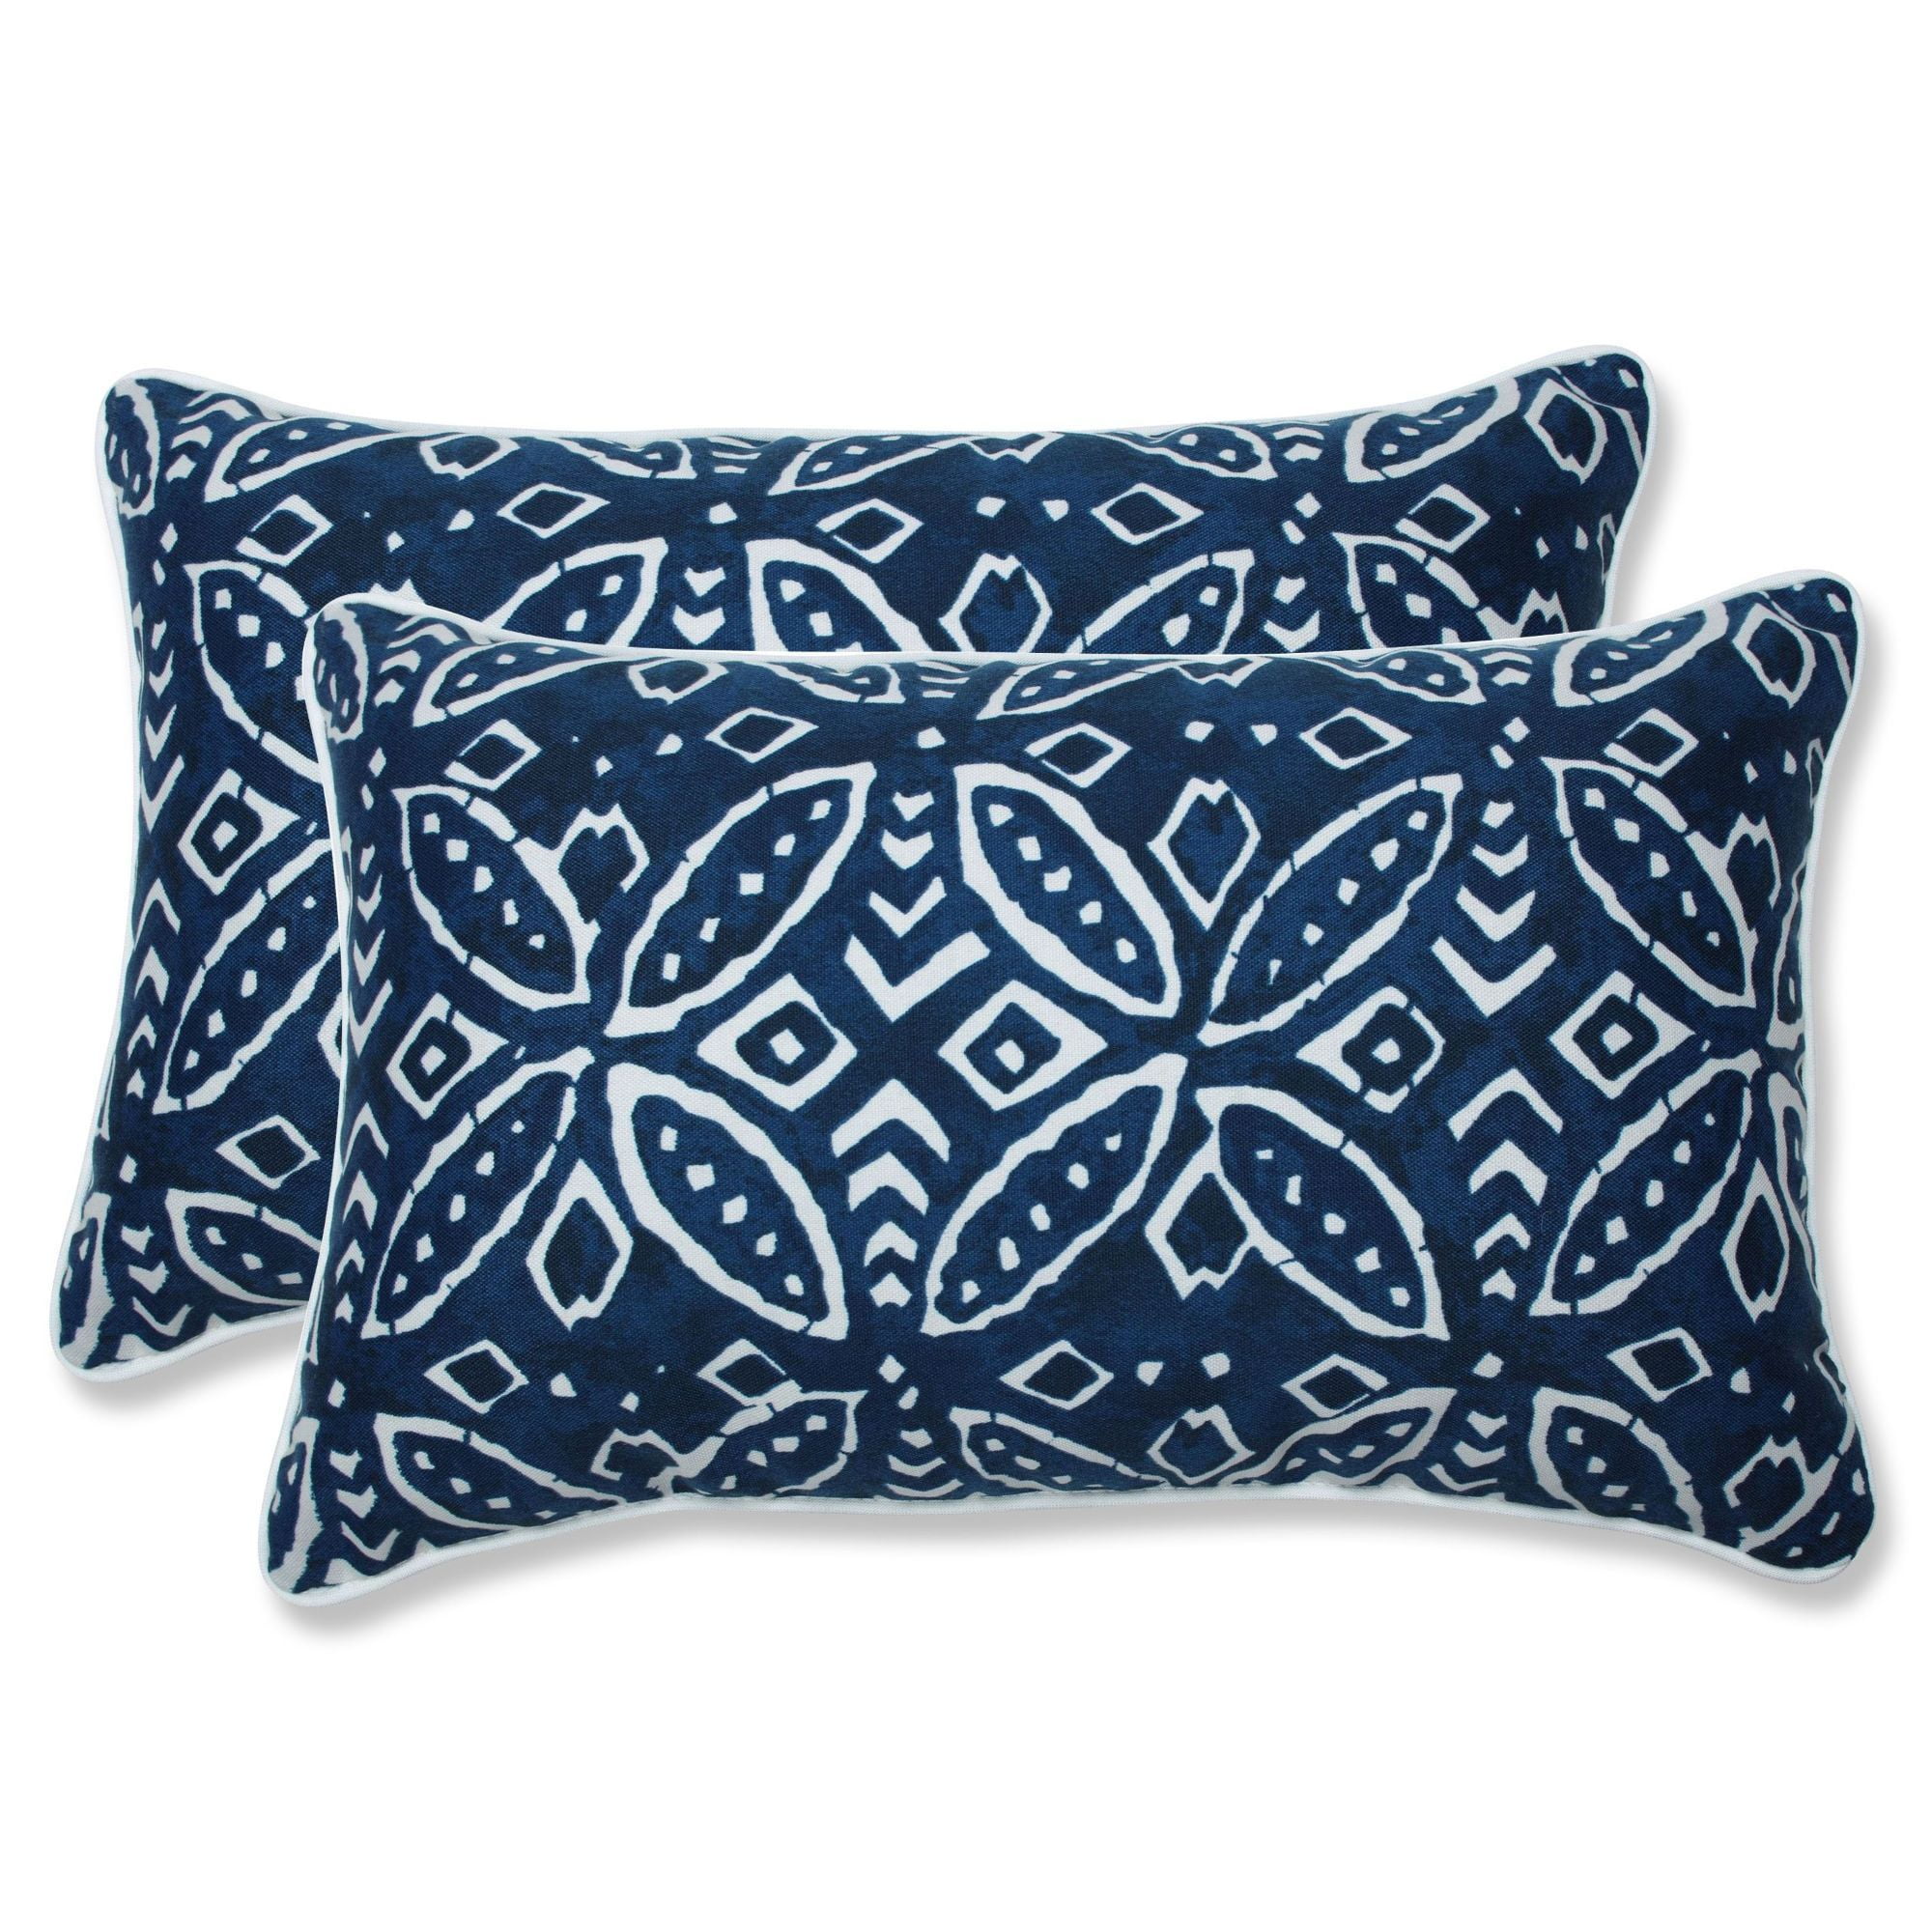 Set of 2 Blue and White Outdoor Patio Rectangular Throw Pillow 18.5"